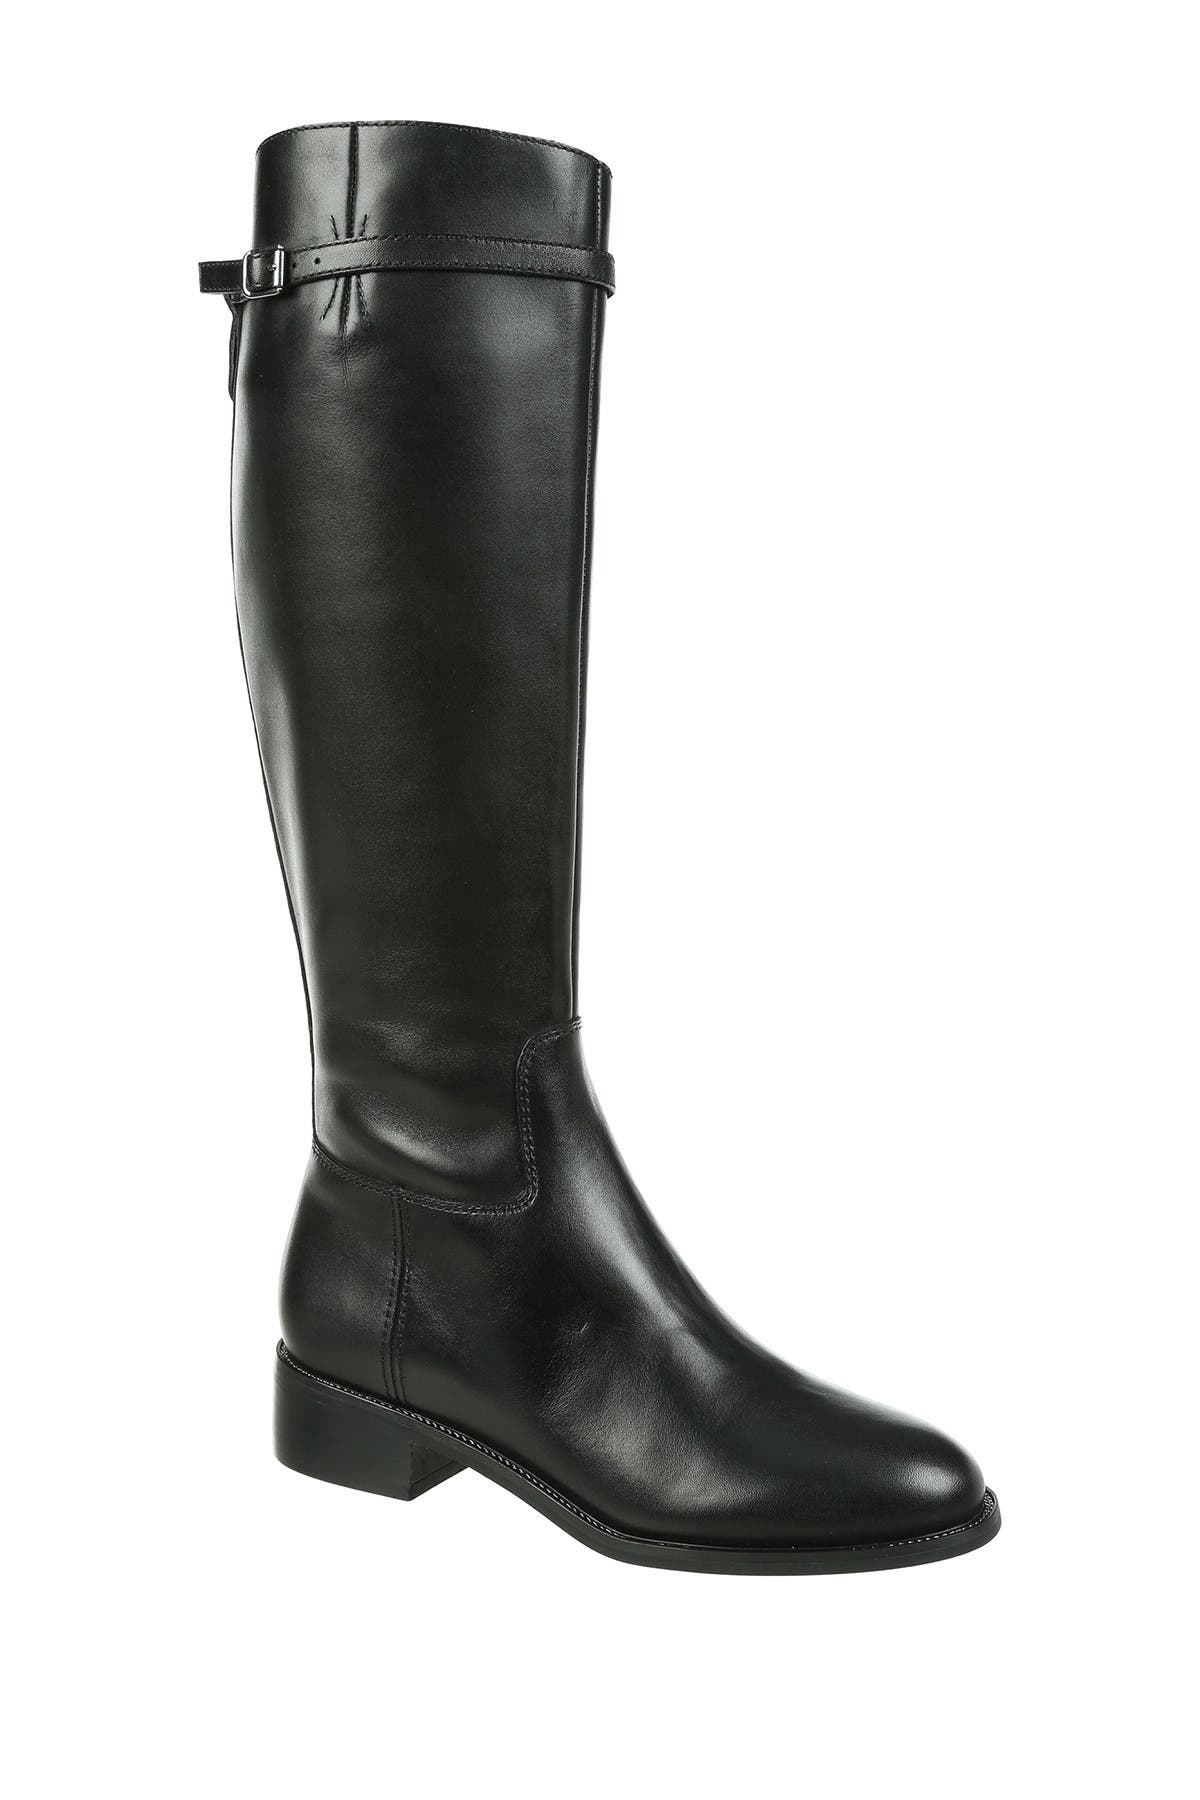 franco sarto black tall boots